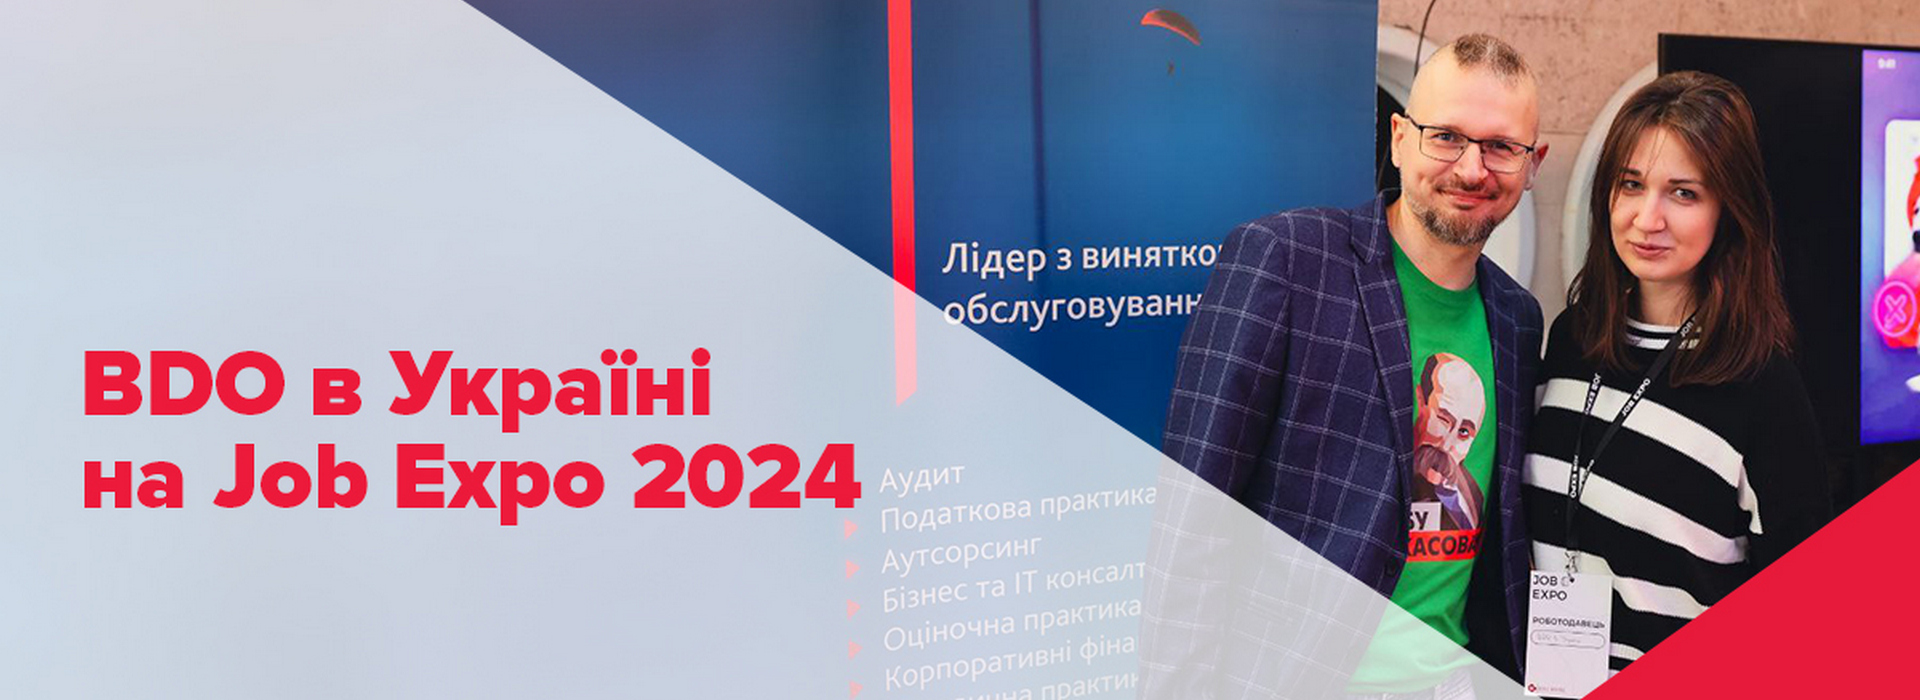 BDO в Україні на Job Expo 2024